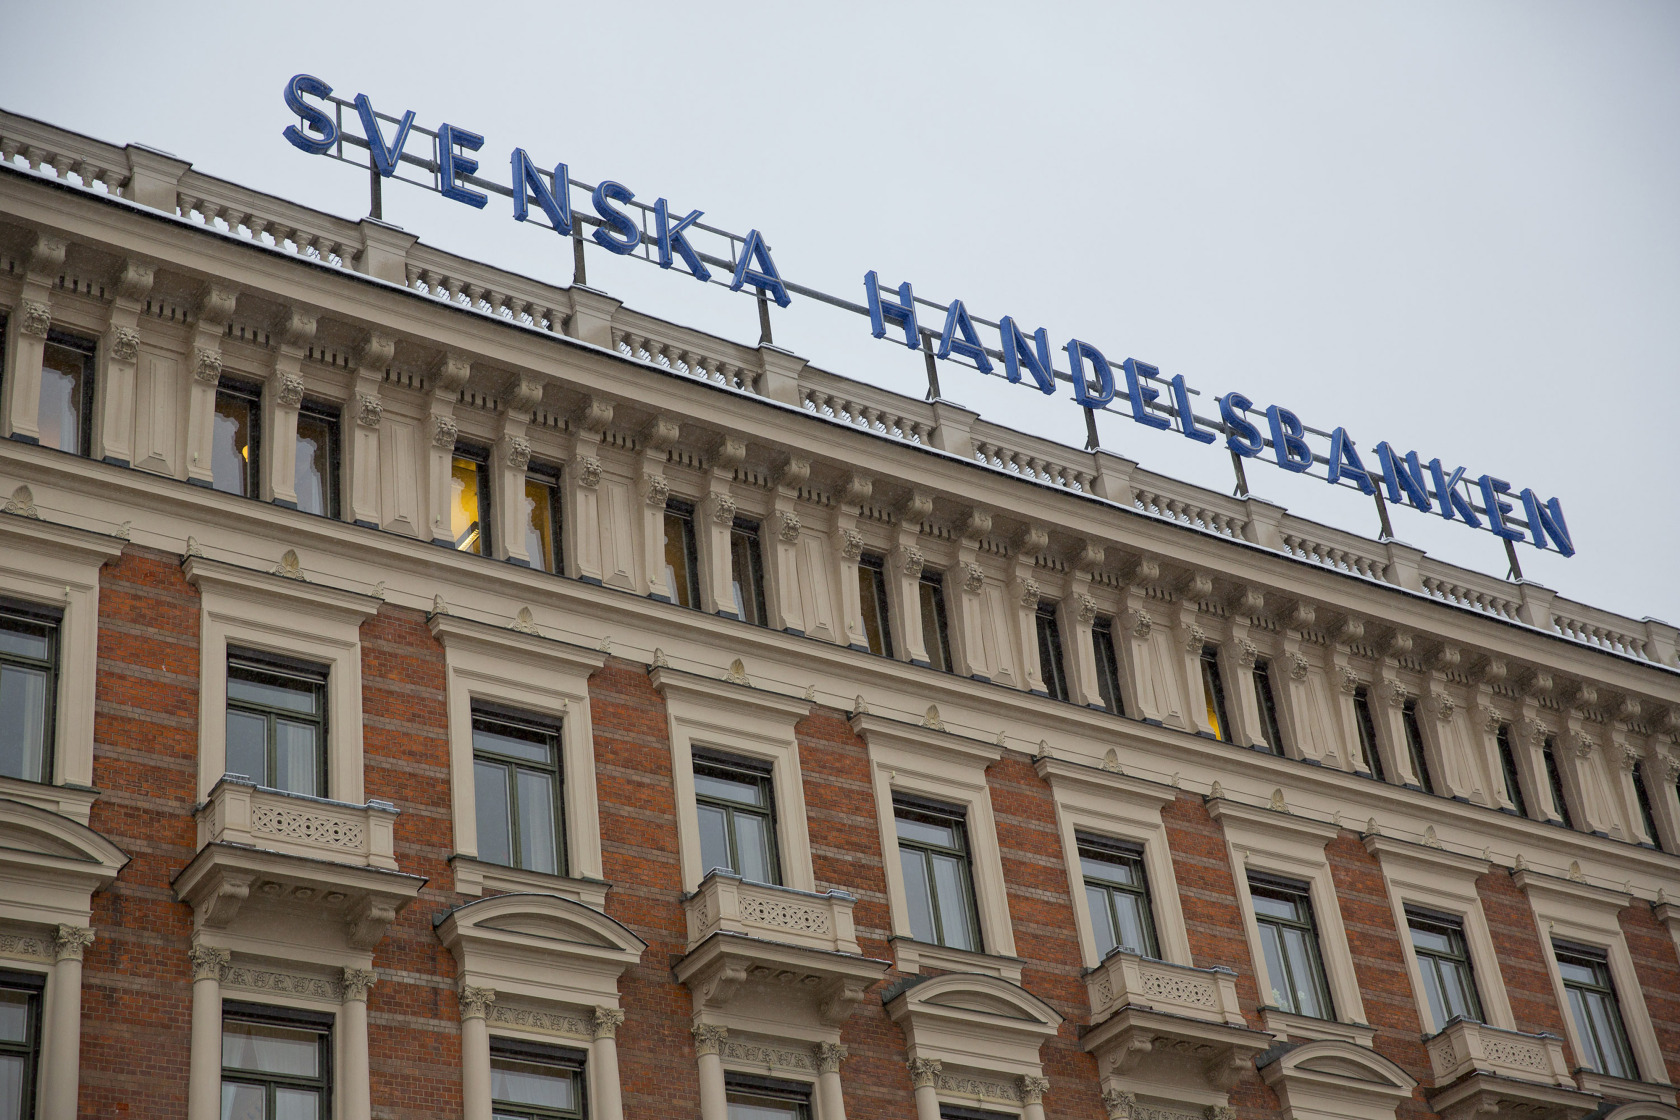 The headquarters of Svenska Handelsbanken in Stockholm.